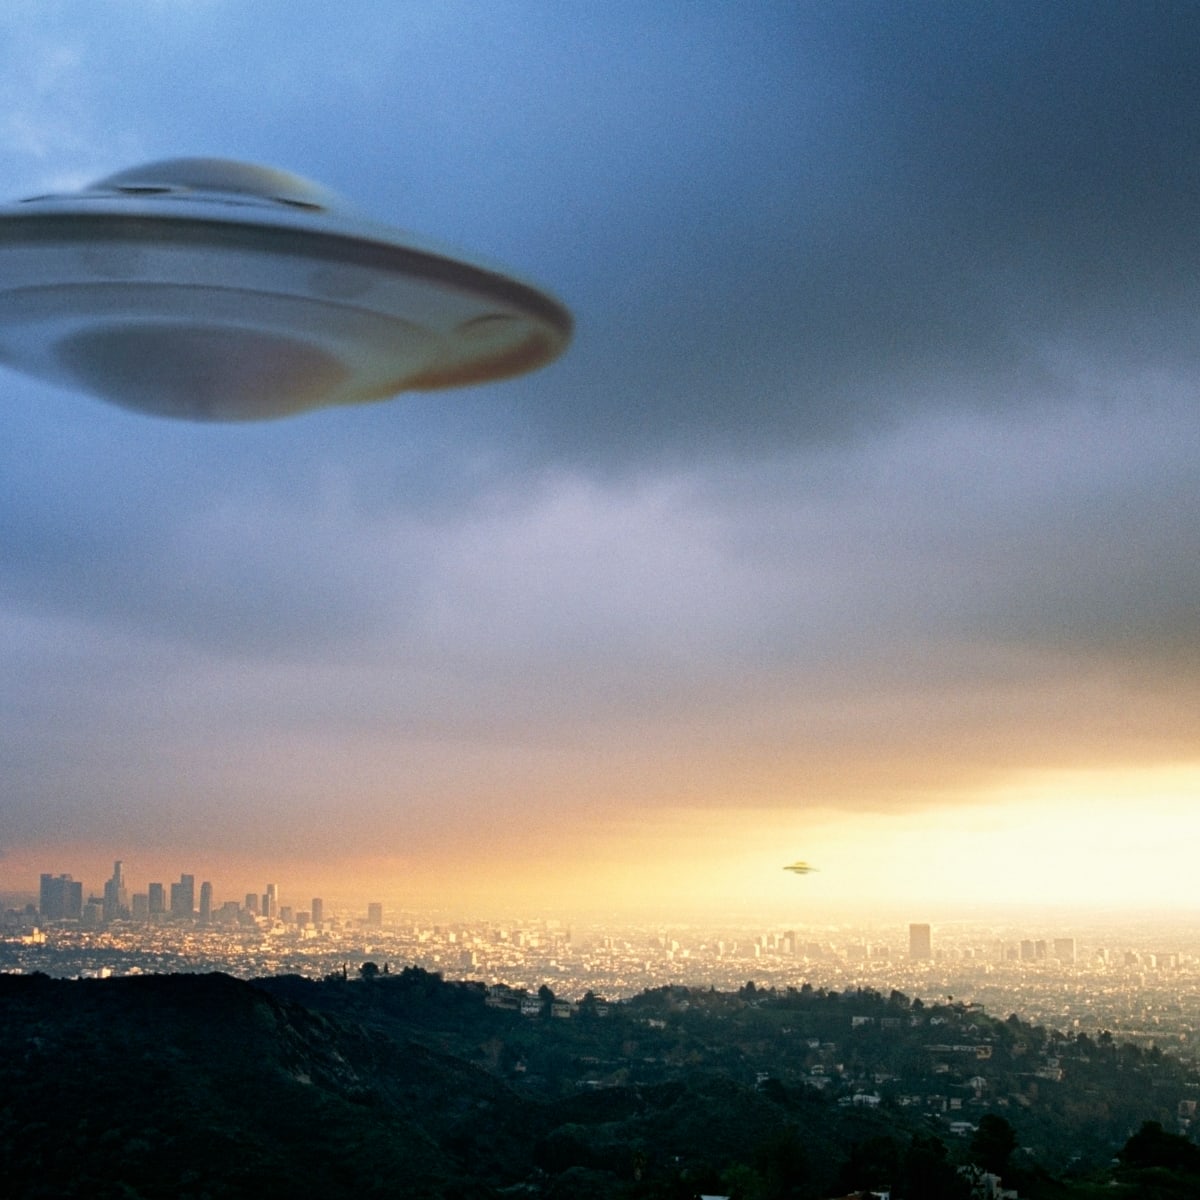 NASA Begins an Official UFO Investigation